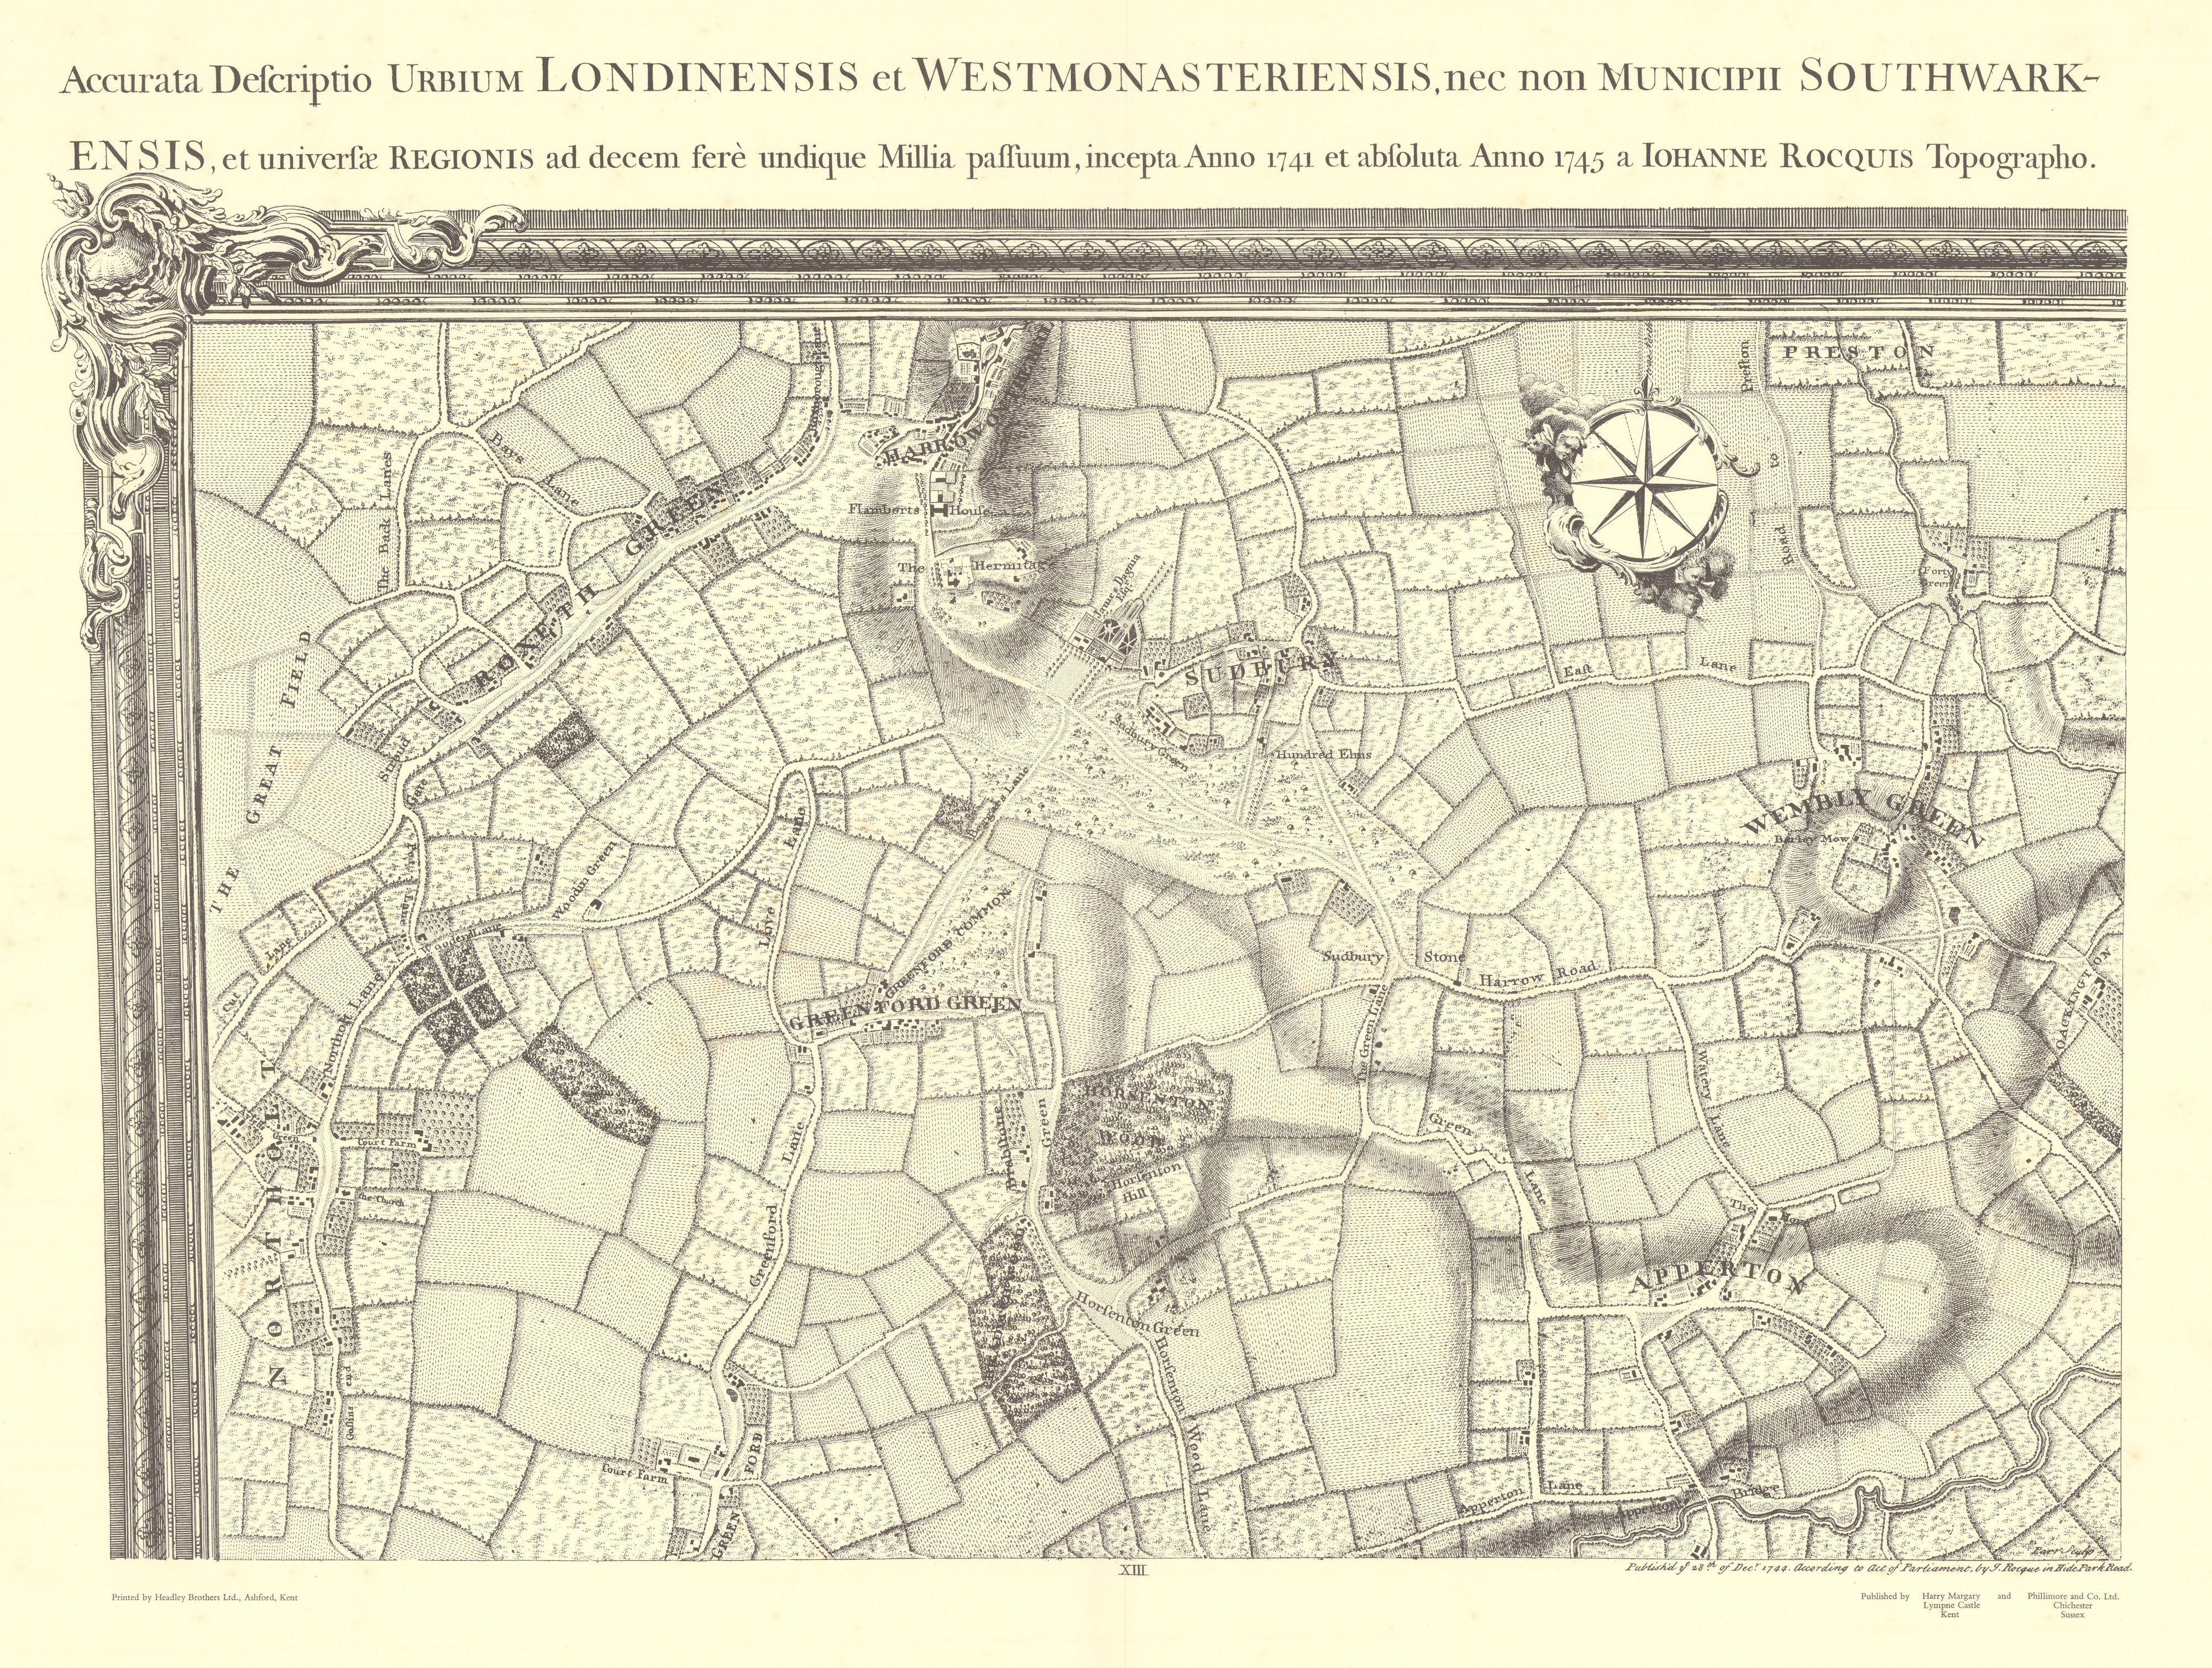 Sudbury, Northolt, Wembley, Alperton, Harrow. #13. After ROCQUE 1971 (1746) map